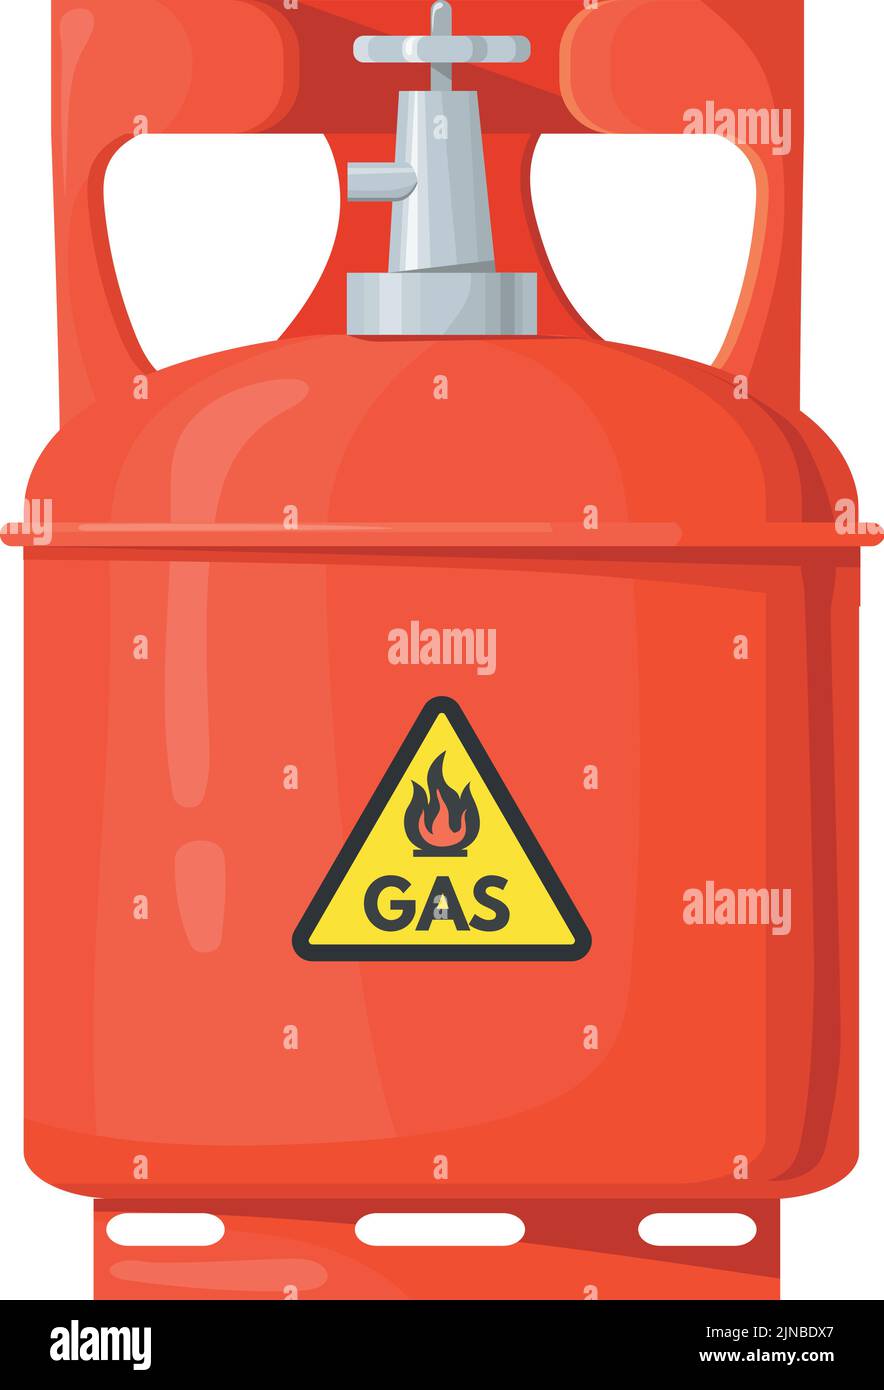 Liquid argon gas Stock Vector Images - Alamy